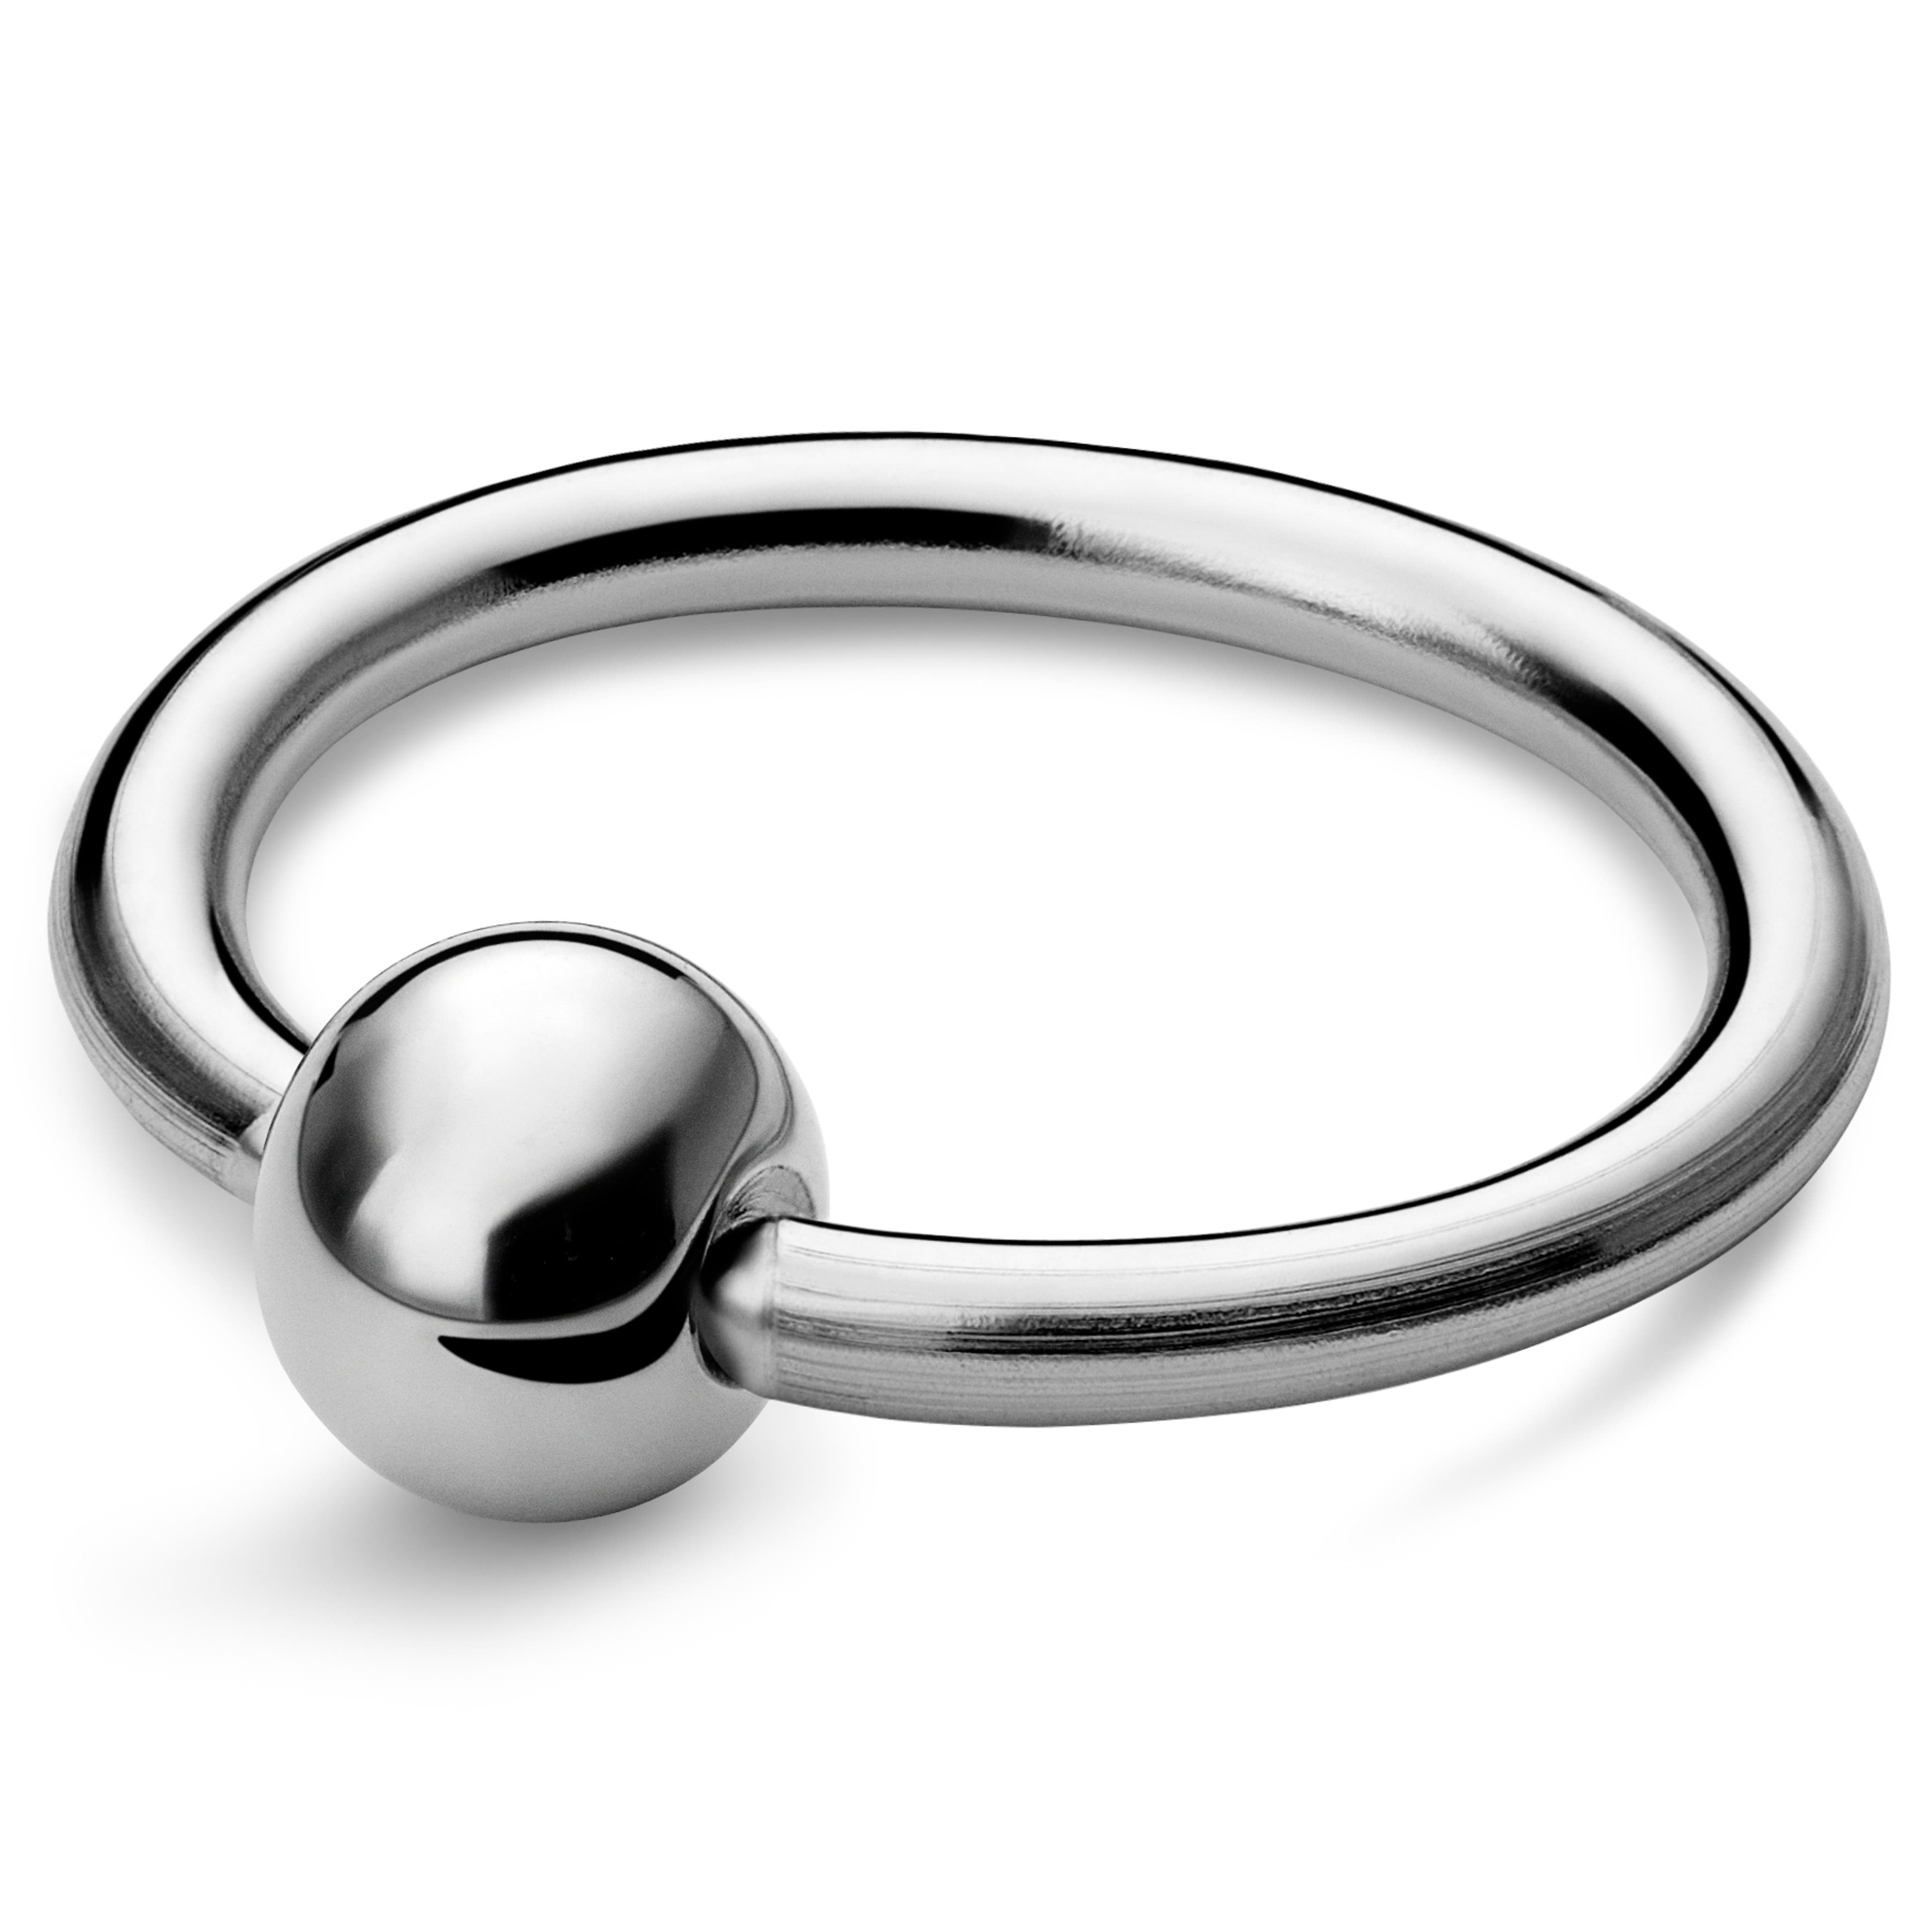 Captive bead ring da 6 mm in titanio color argento